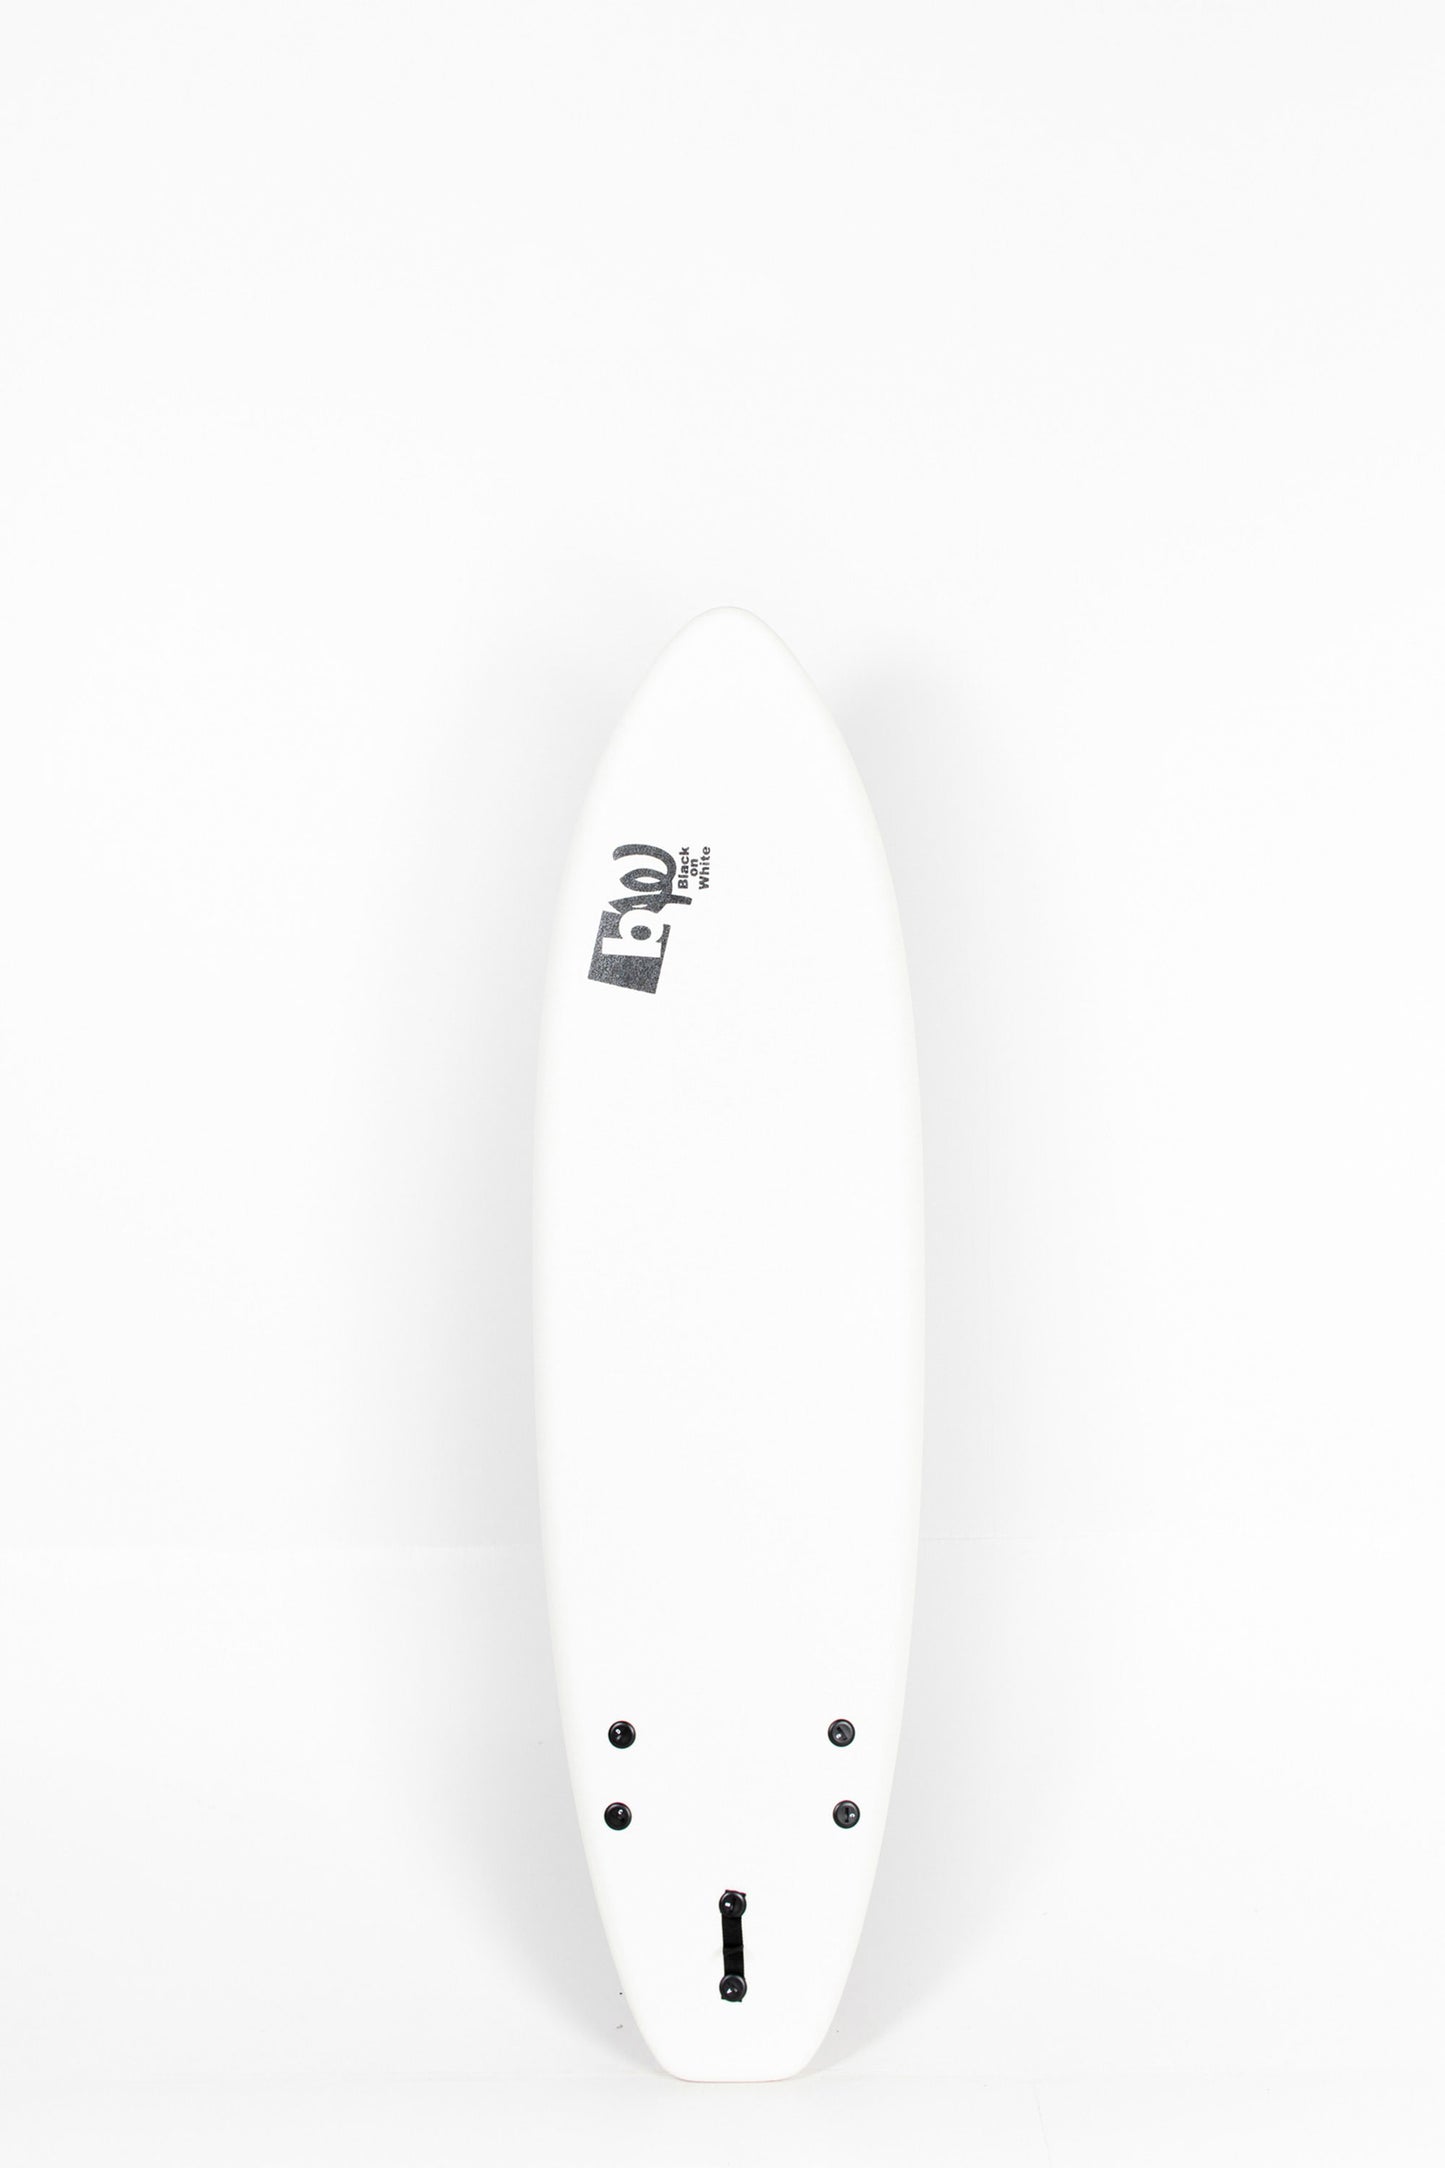 Pukas Surf Shop - Black On White SOFTBOARDS - BW SOFTBOARDS 6.6